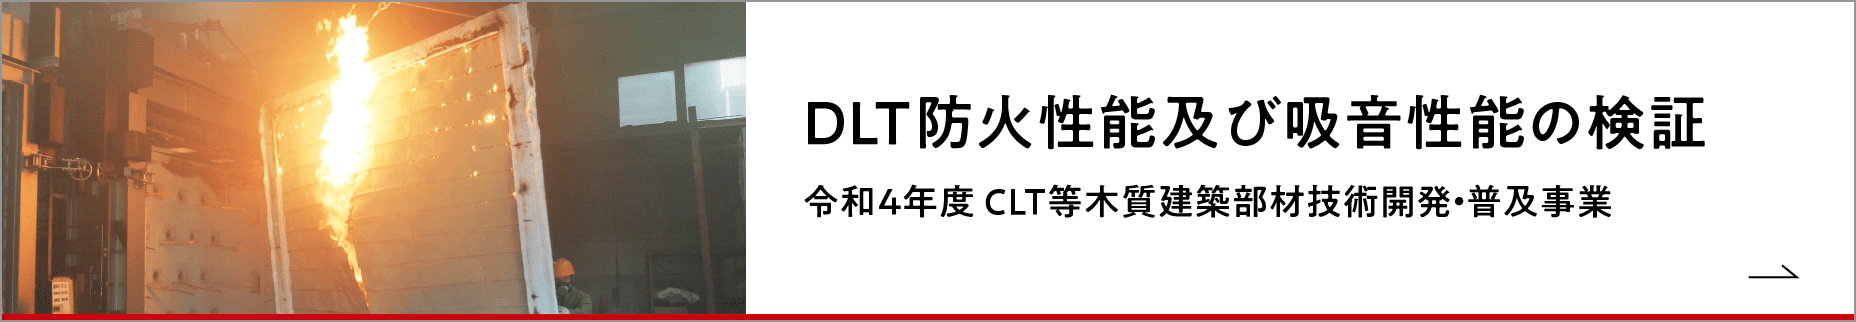 DLT防火性能及び吸音性能の検証 令和4年度 CLT等木質建築部材技術開発・普及事業